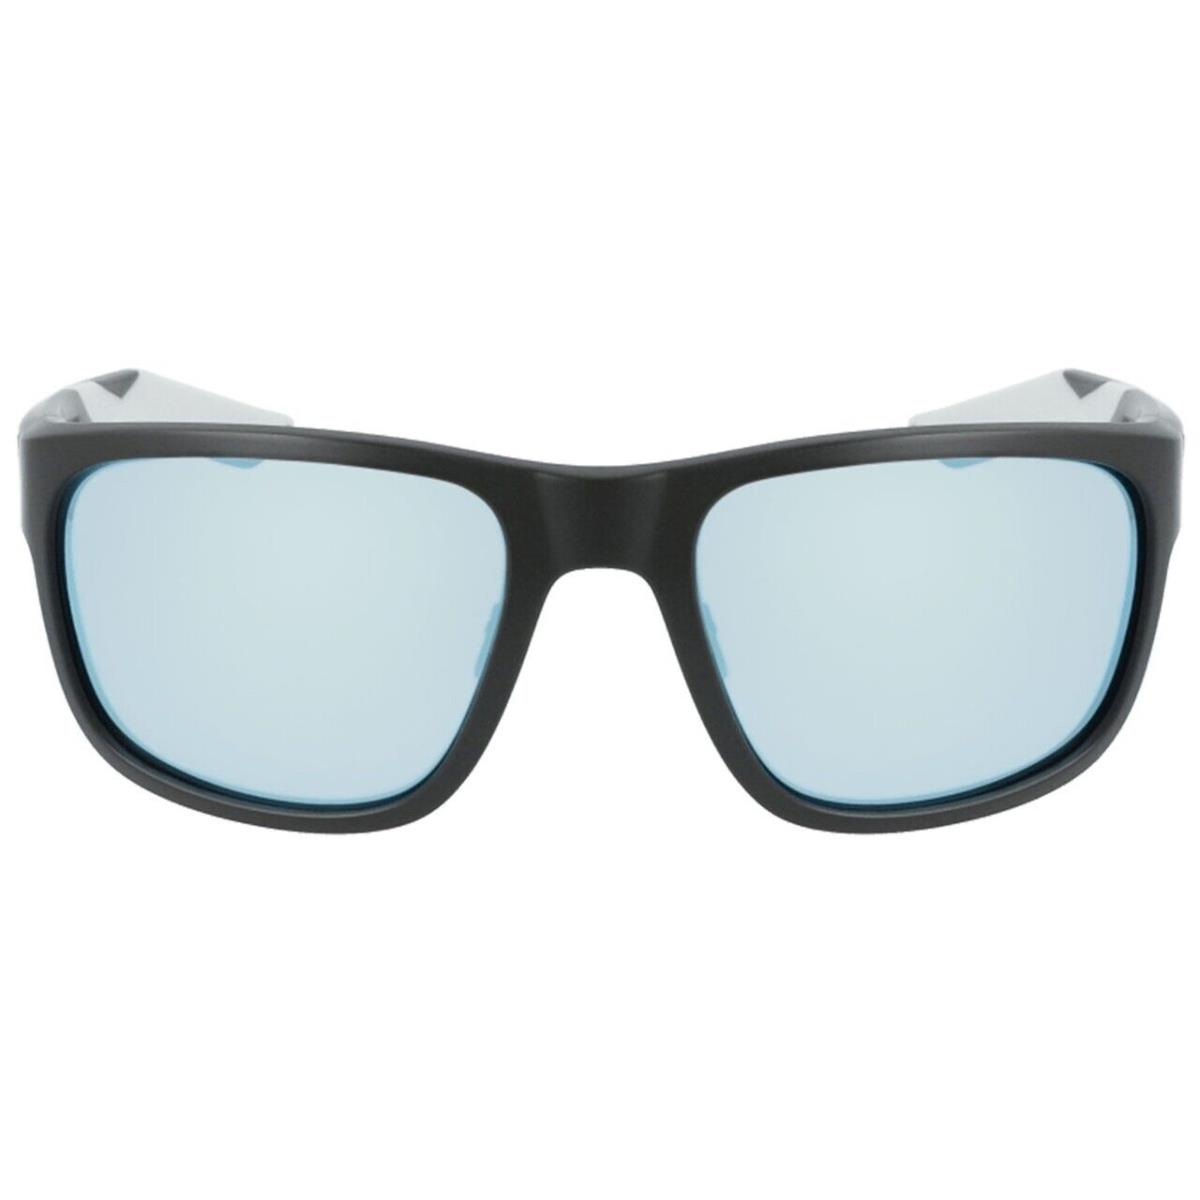 Dragon Shore X H20 Sunglasses - Matte Gray / Lumalens Blue Frozen Polarized Lens